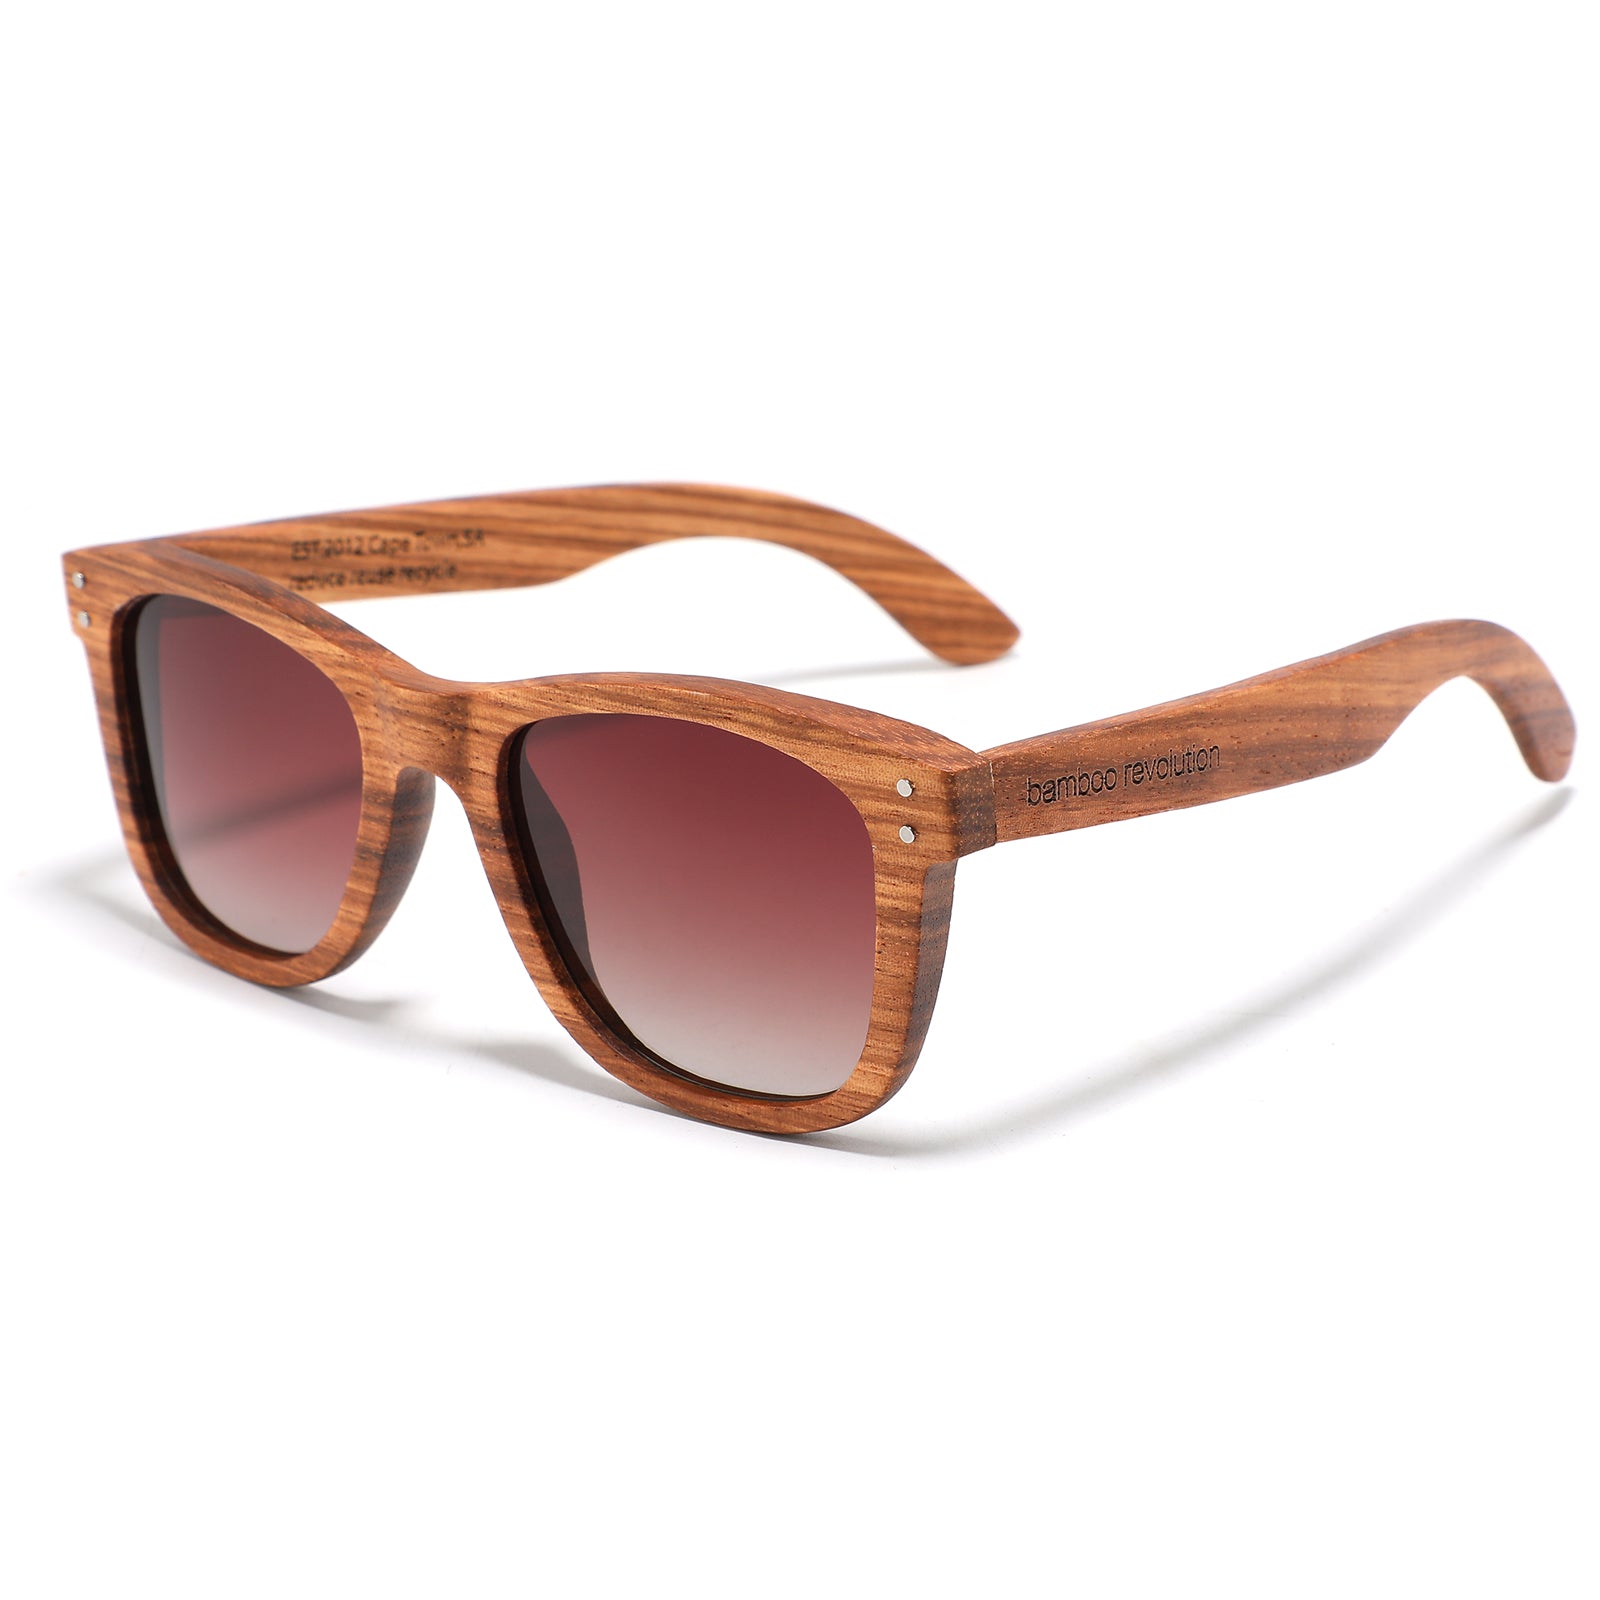 Mimigo 100% Real Zebra Wood Sunglasses Polarized Handmade Bamboo